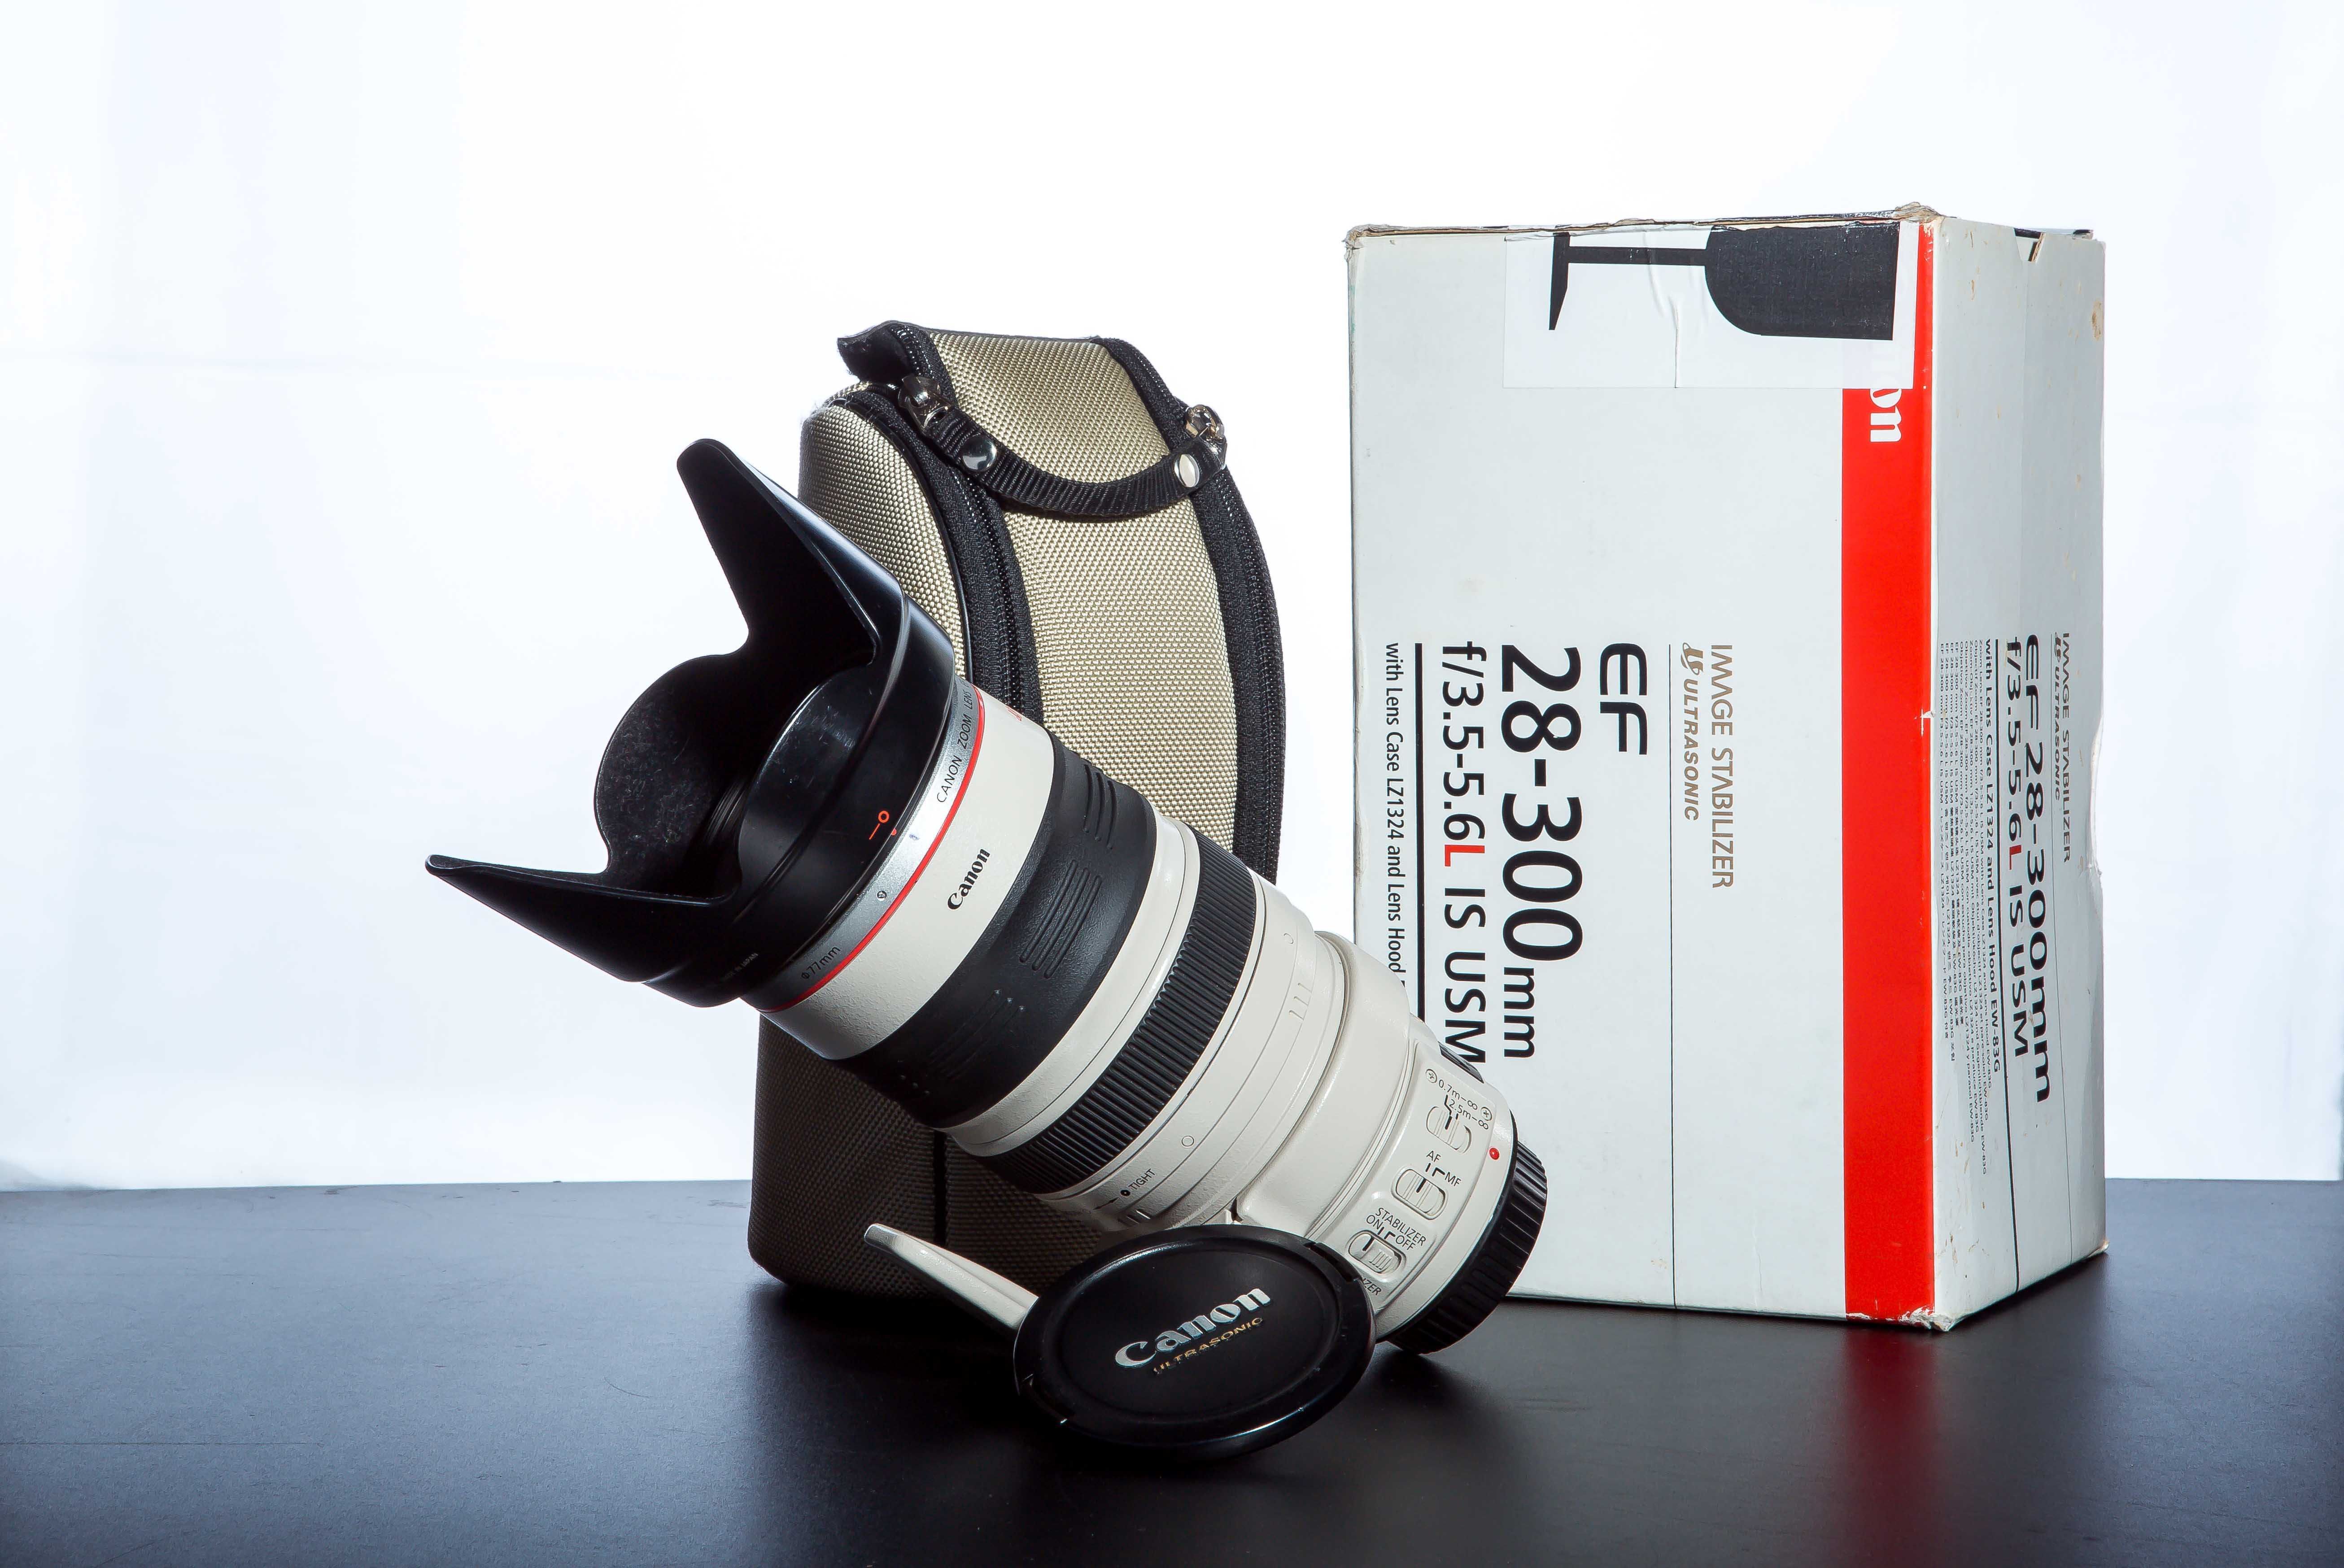 Продам объектив Canon EF 28-300mm f/3.5-5.6L IS USM (EU)